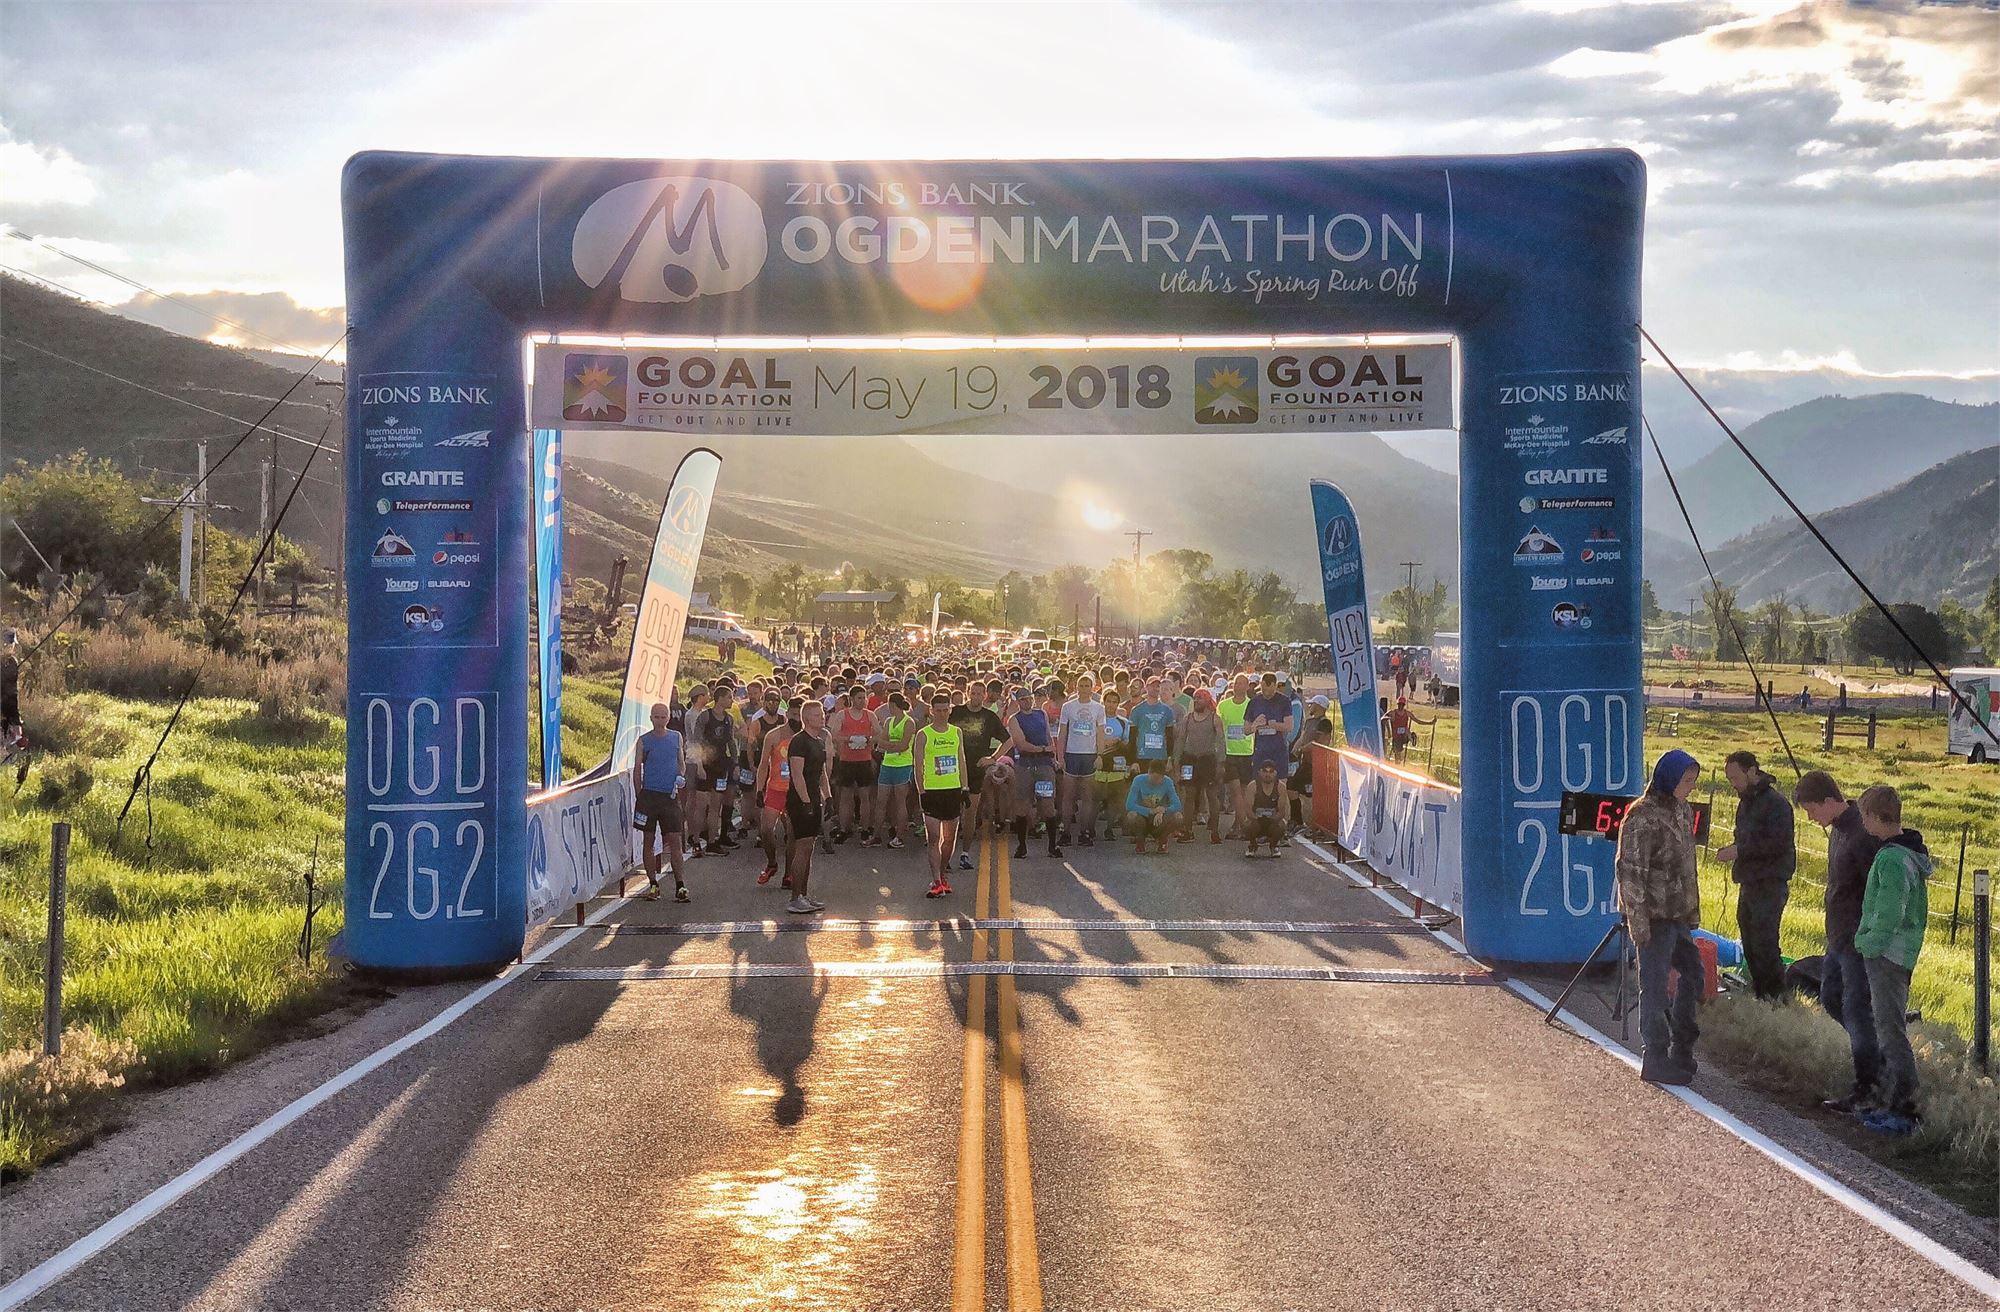 Ogden Marathon, Utah's Spring Run Off